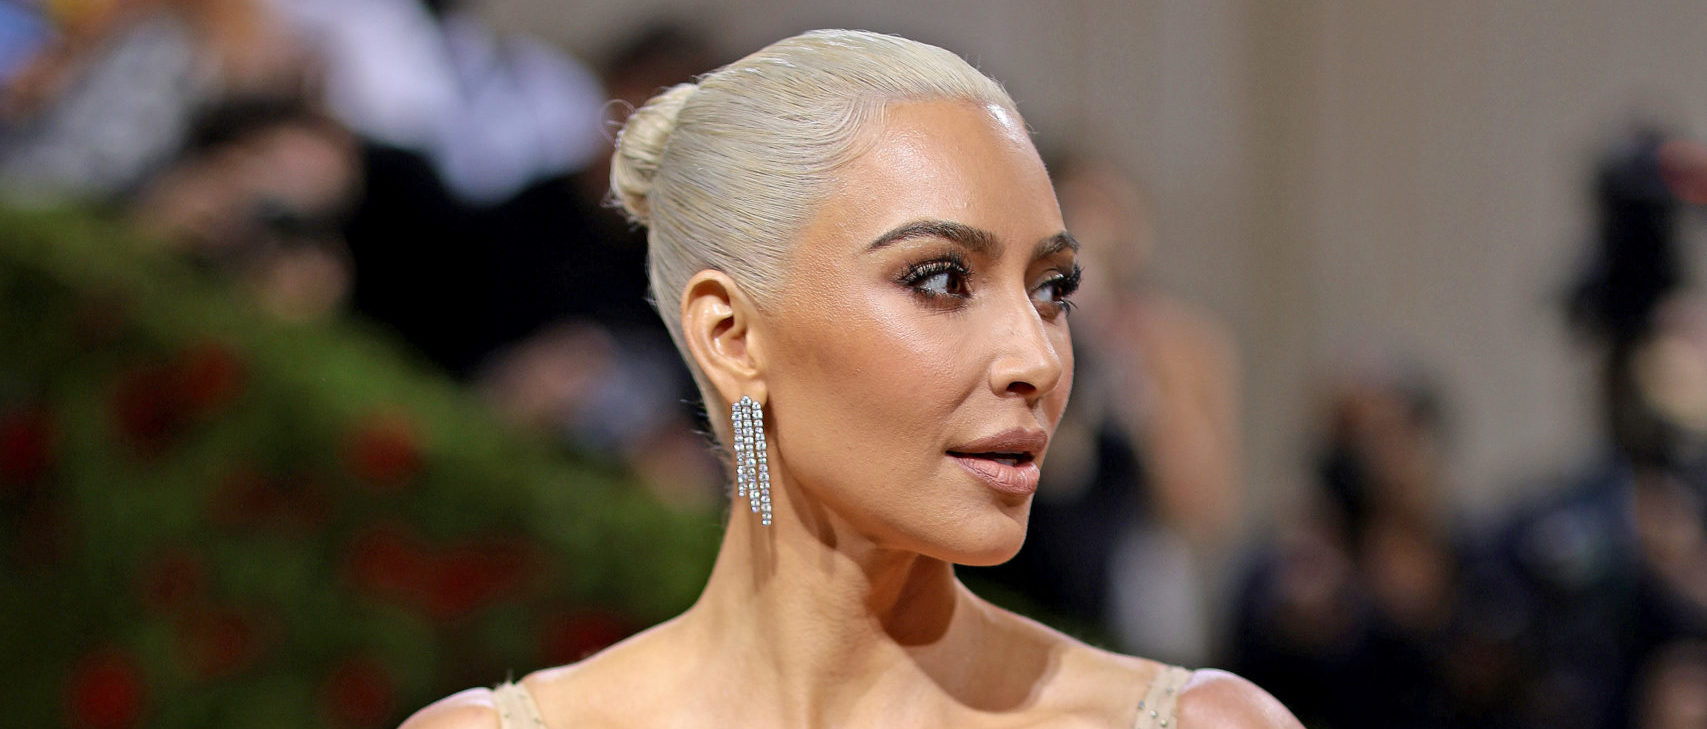 Kim Kardashian Now Owns A Piece Of Marilyn Monroe’s Hair | The Daily Caller